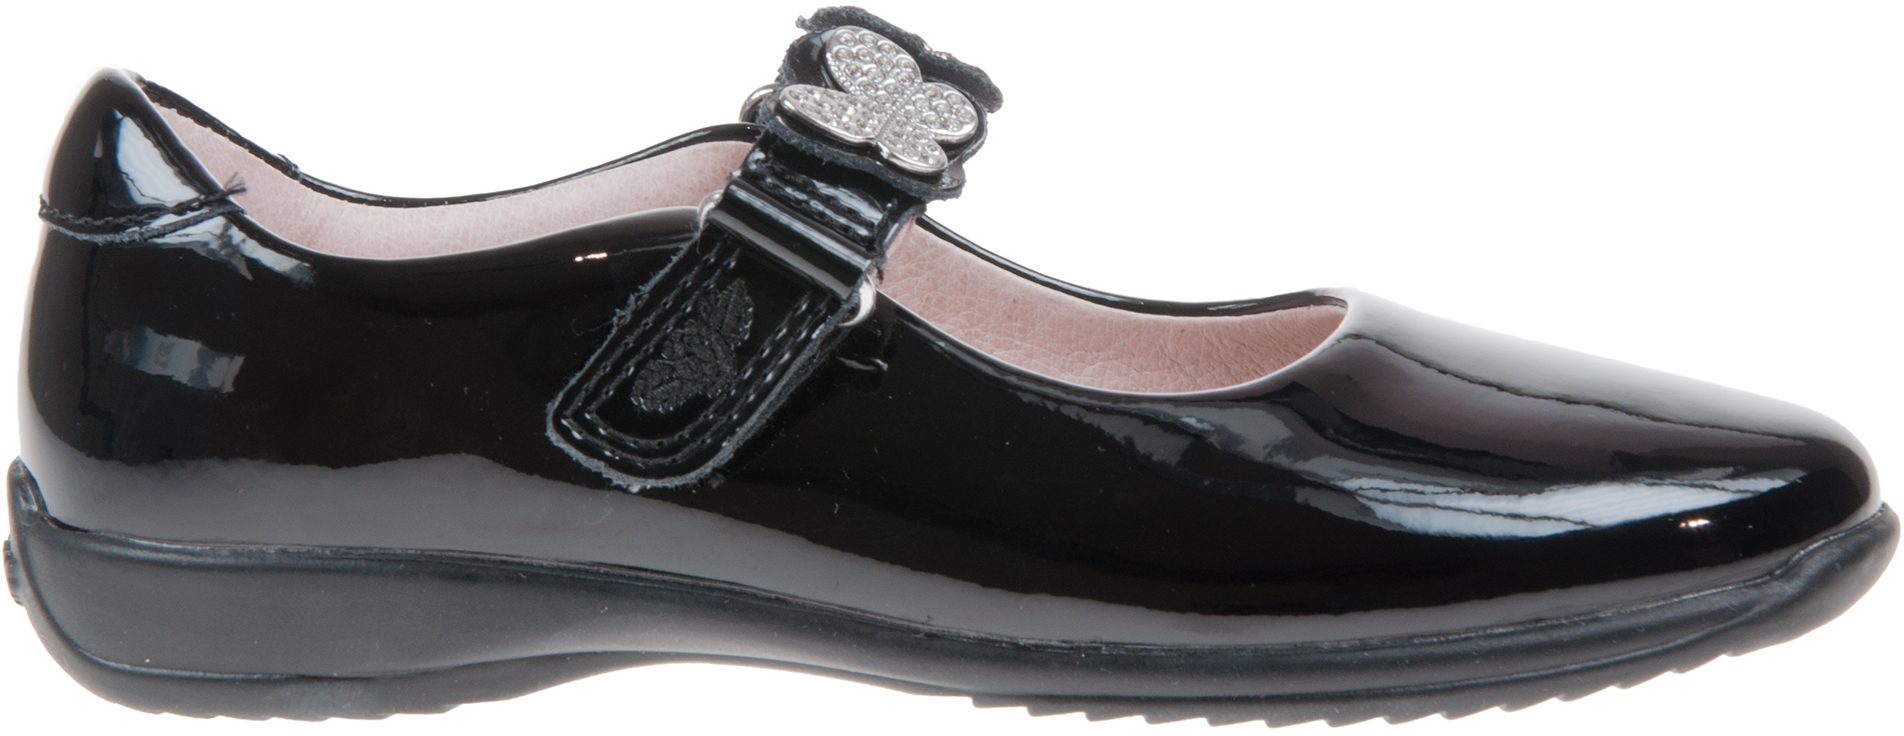 Lelli Kelly Love Black Patent LK8309 - Girls School Shoes - Humphries Shoes